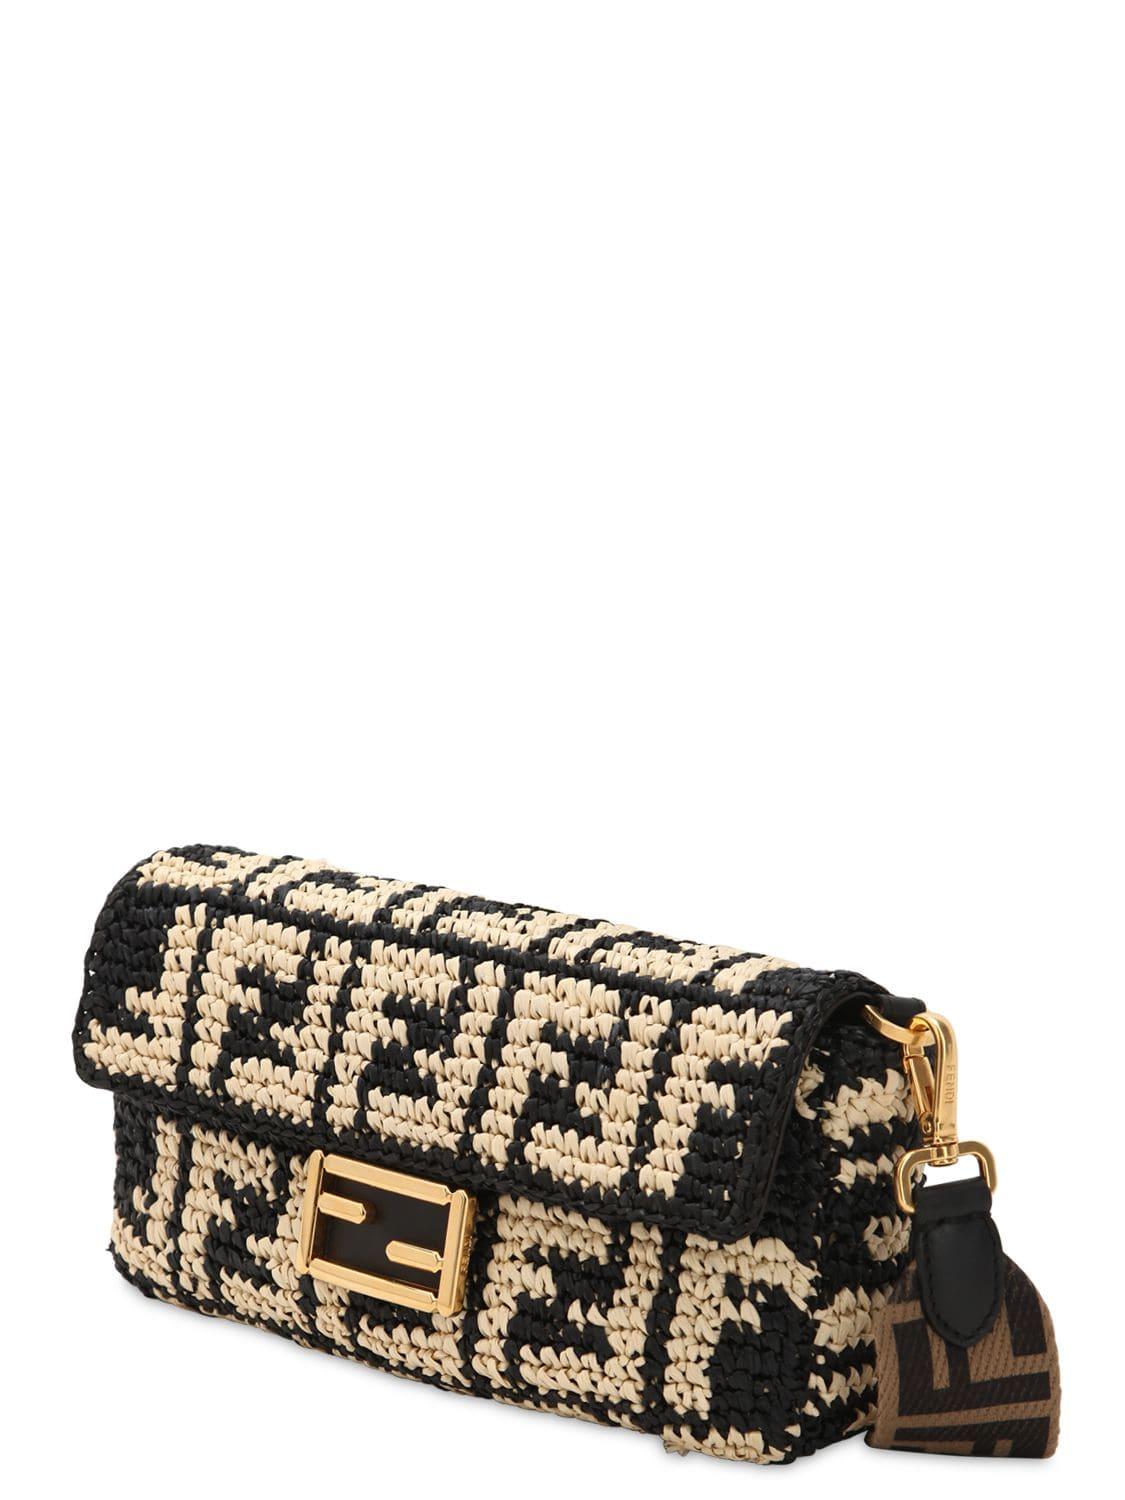 Fendi Logo Embroidered Raffia Baguette Bag in Black | Lyst